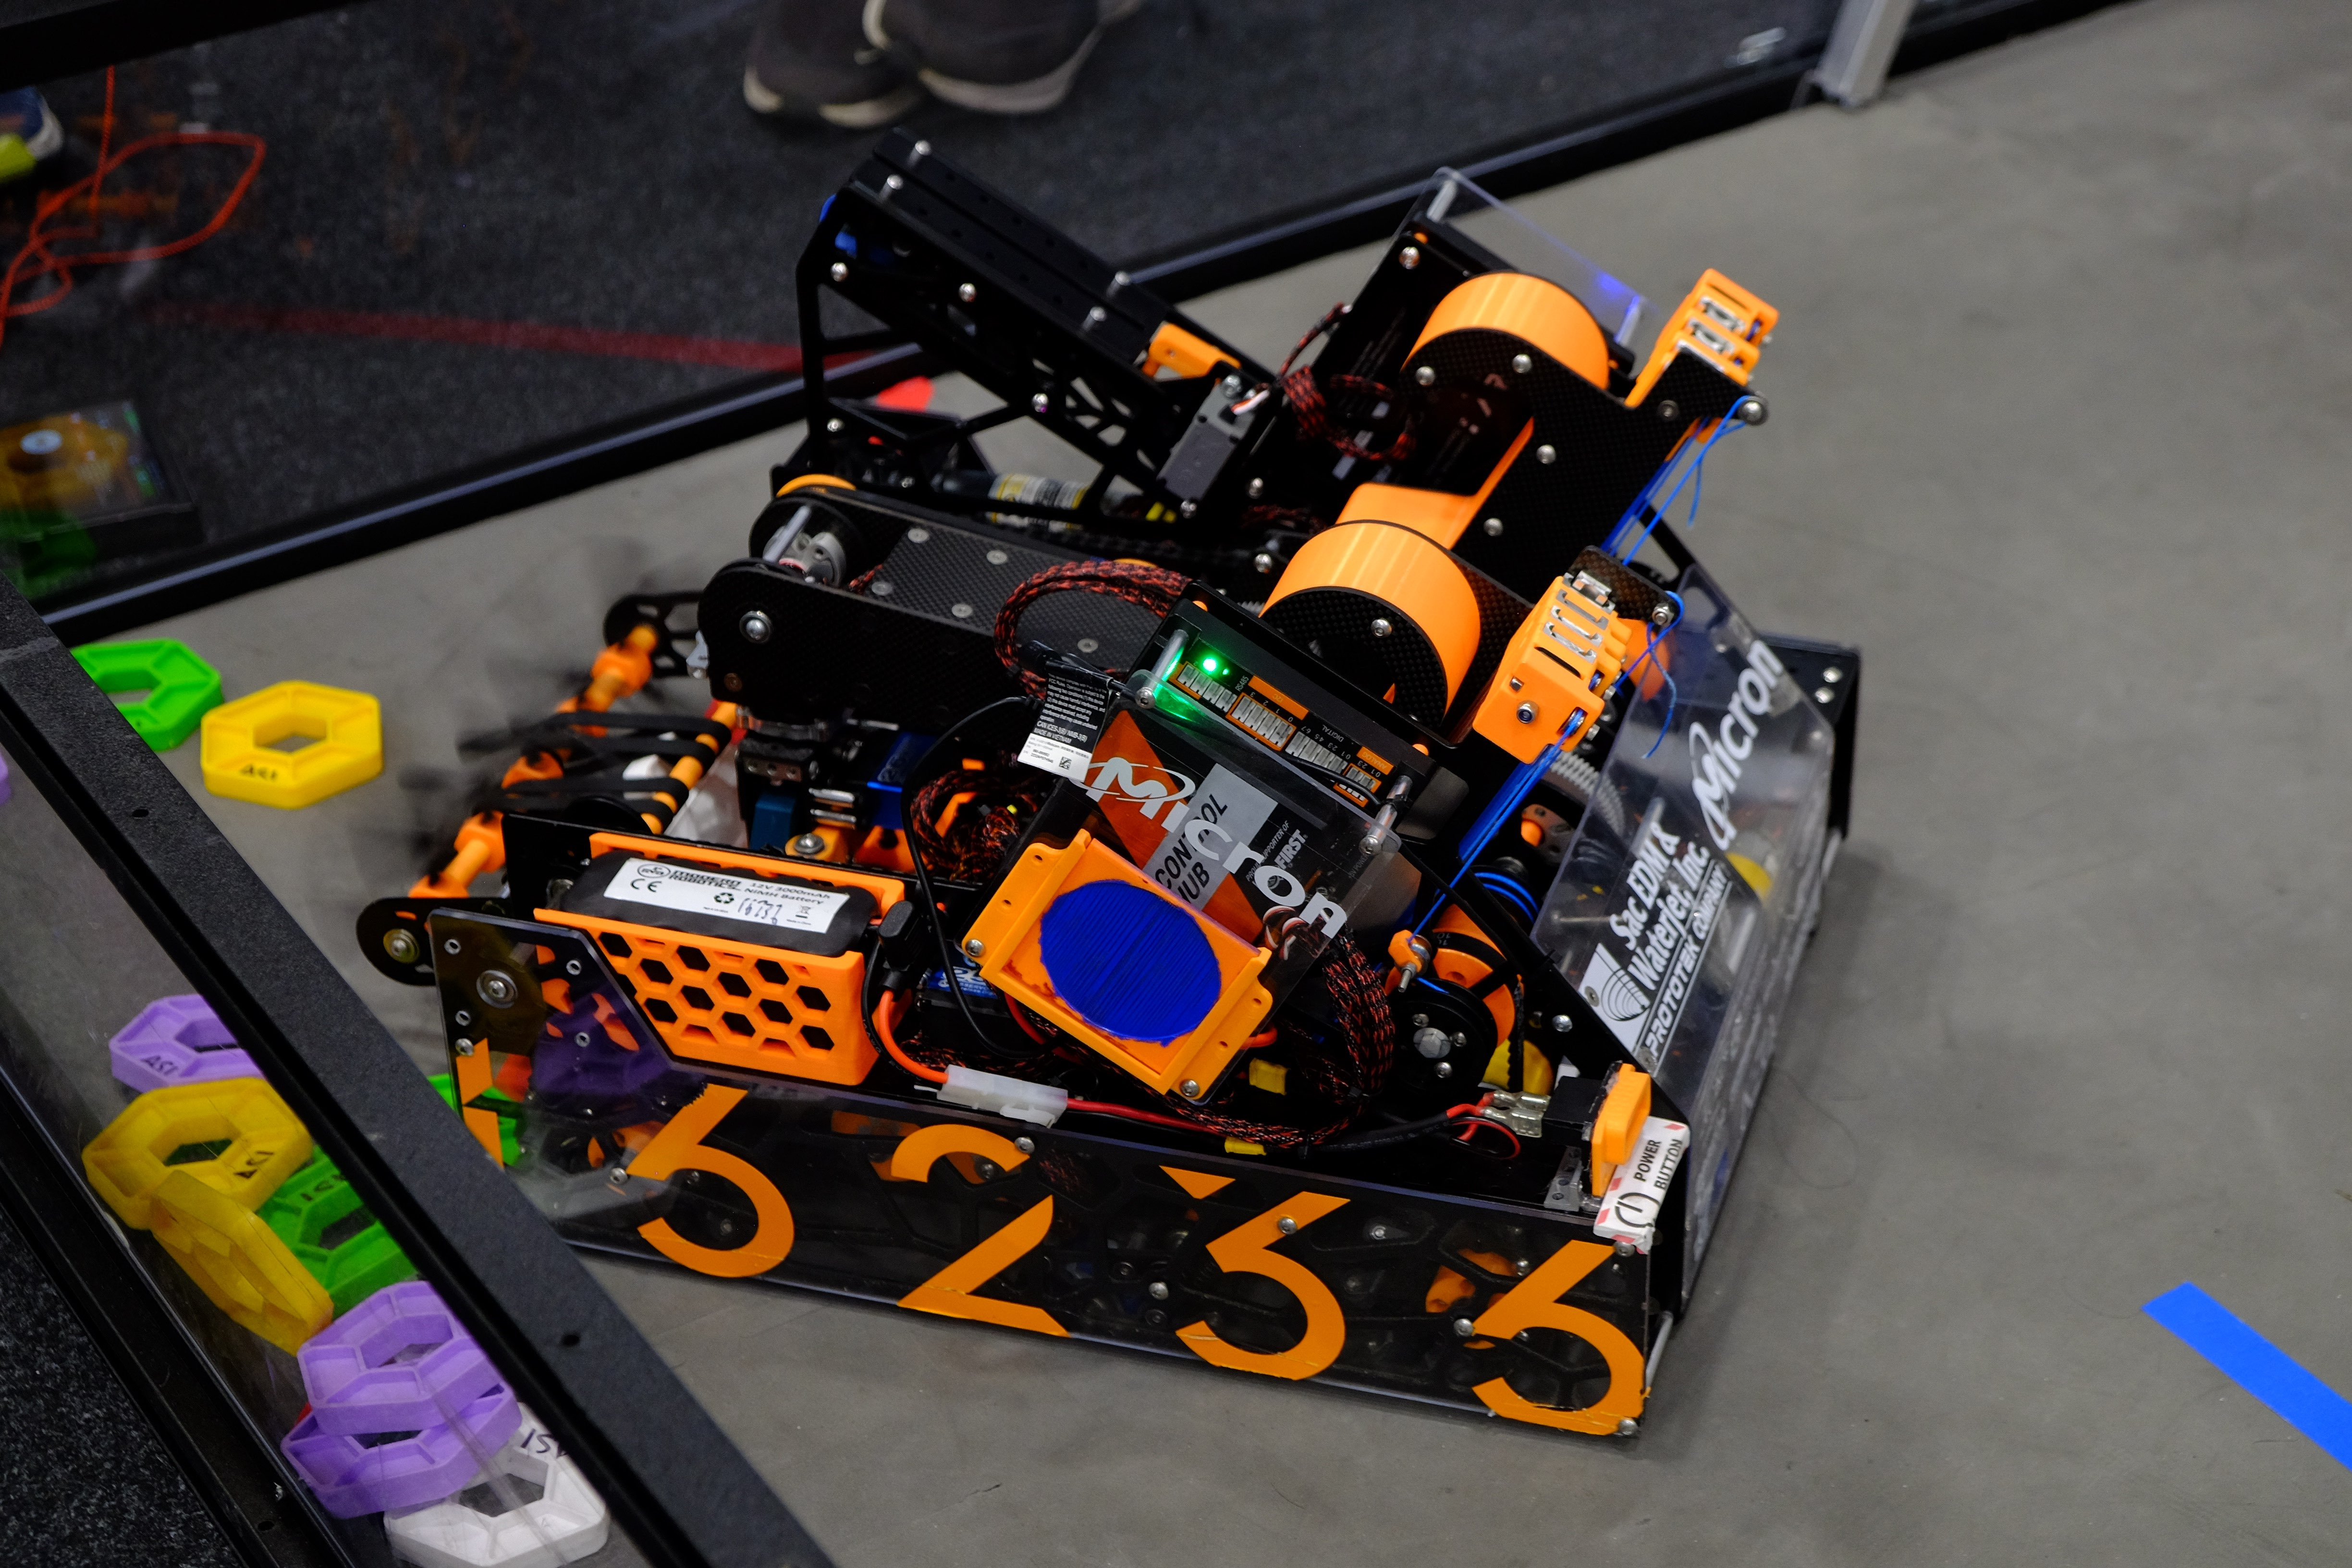 Juice 16236 Award-Winning "REDEMPTION v3" Robot